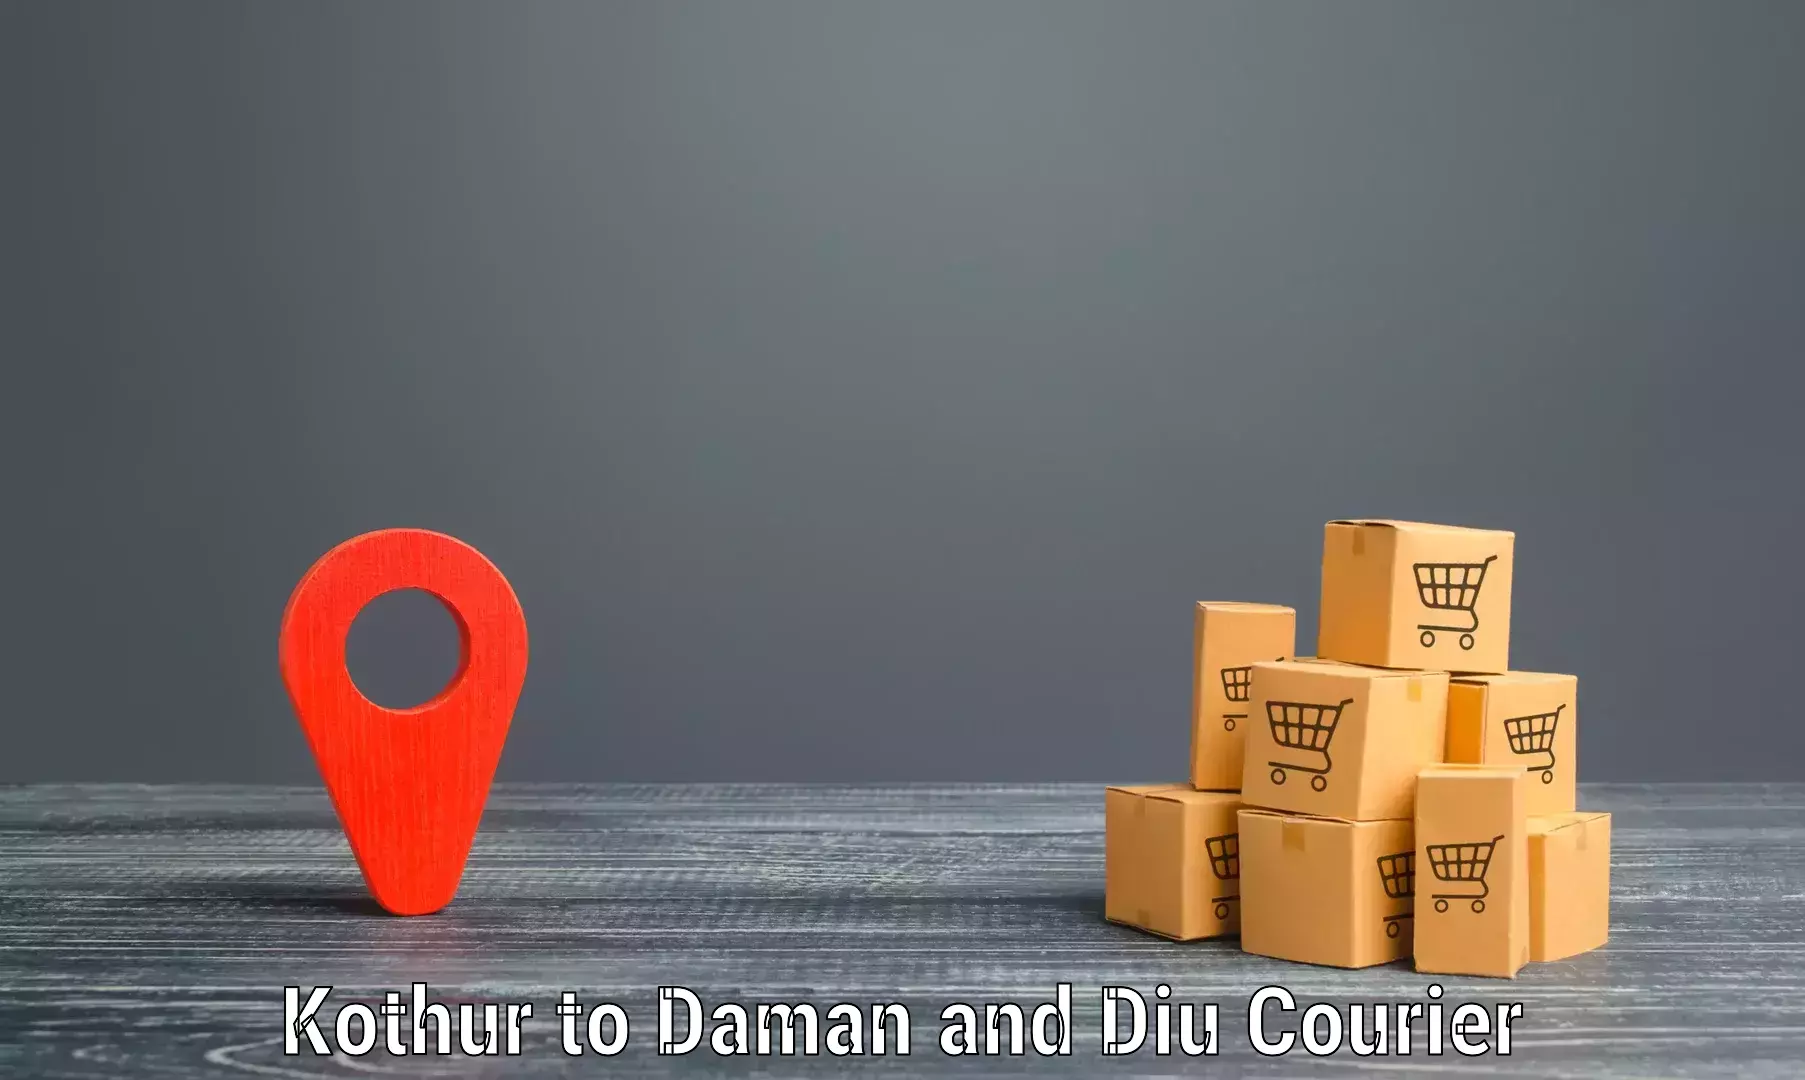 Global courier networks Kothur to Daman